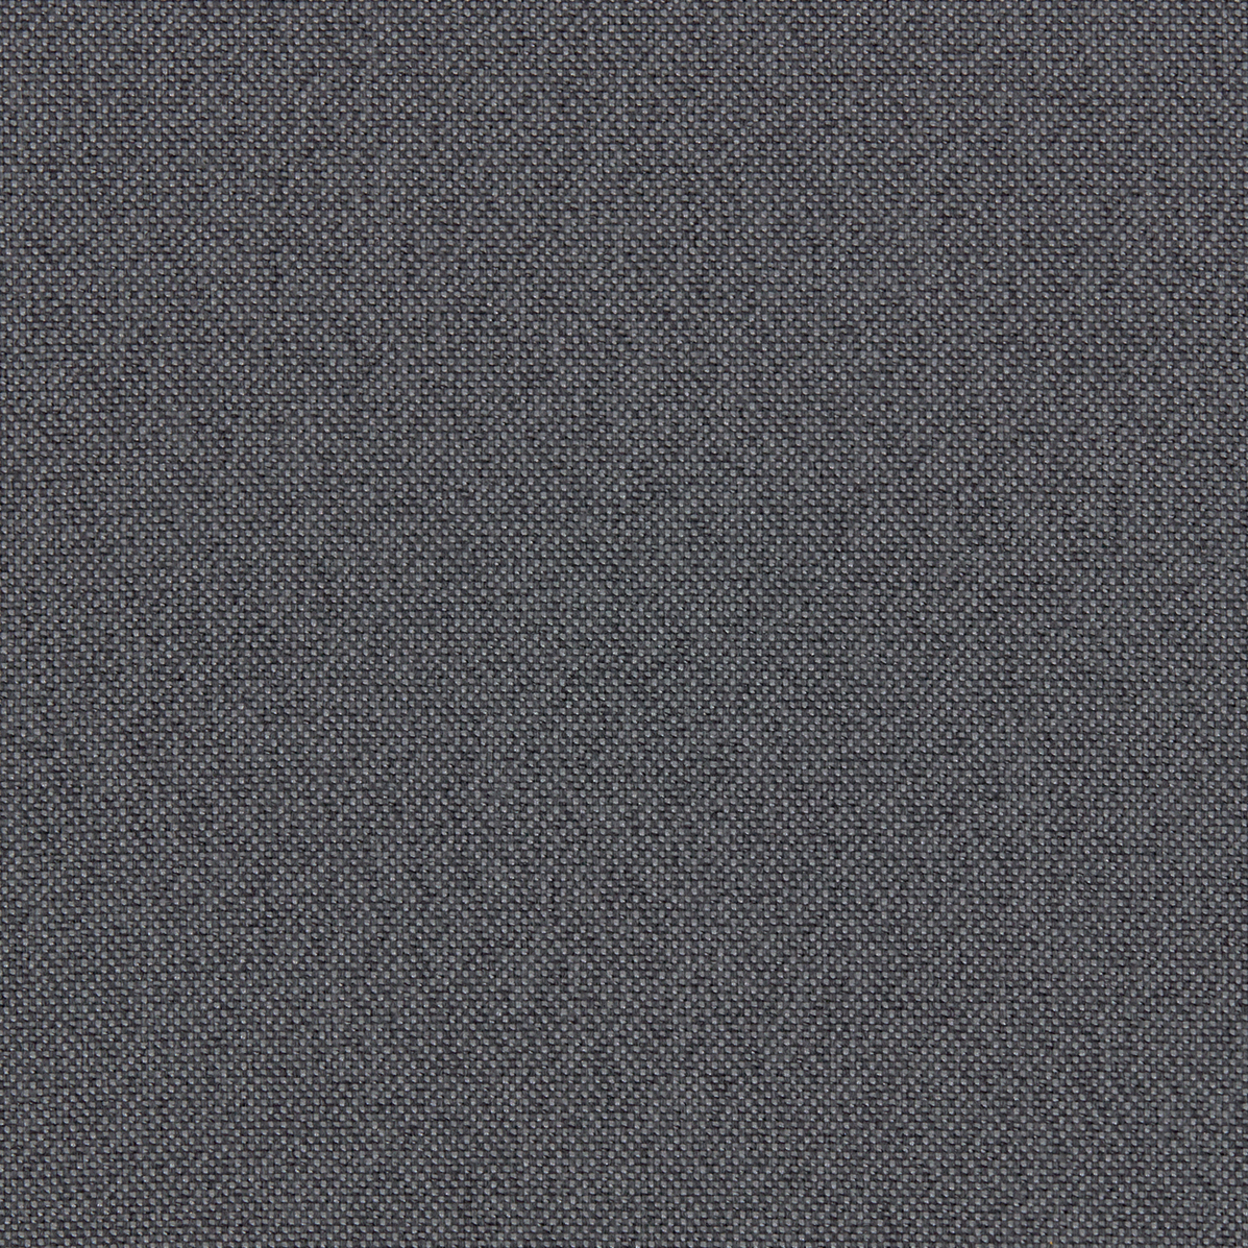 Knight - Meld - Textiles - Materials - Herman Miller